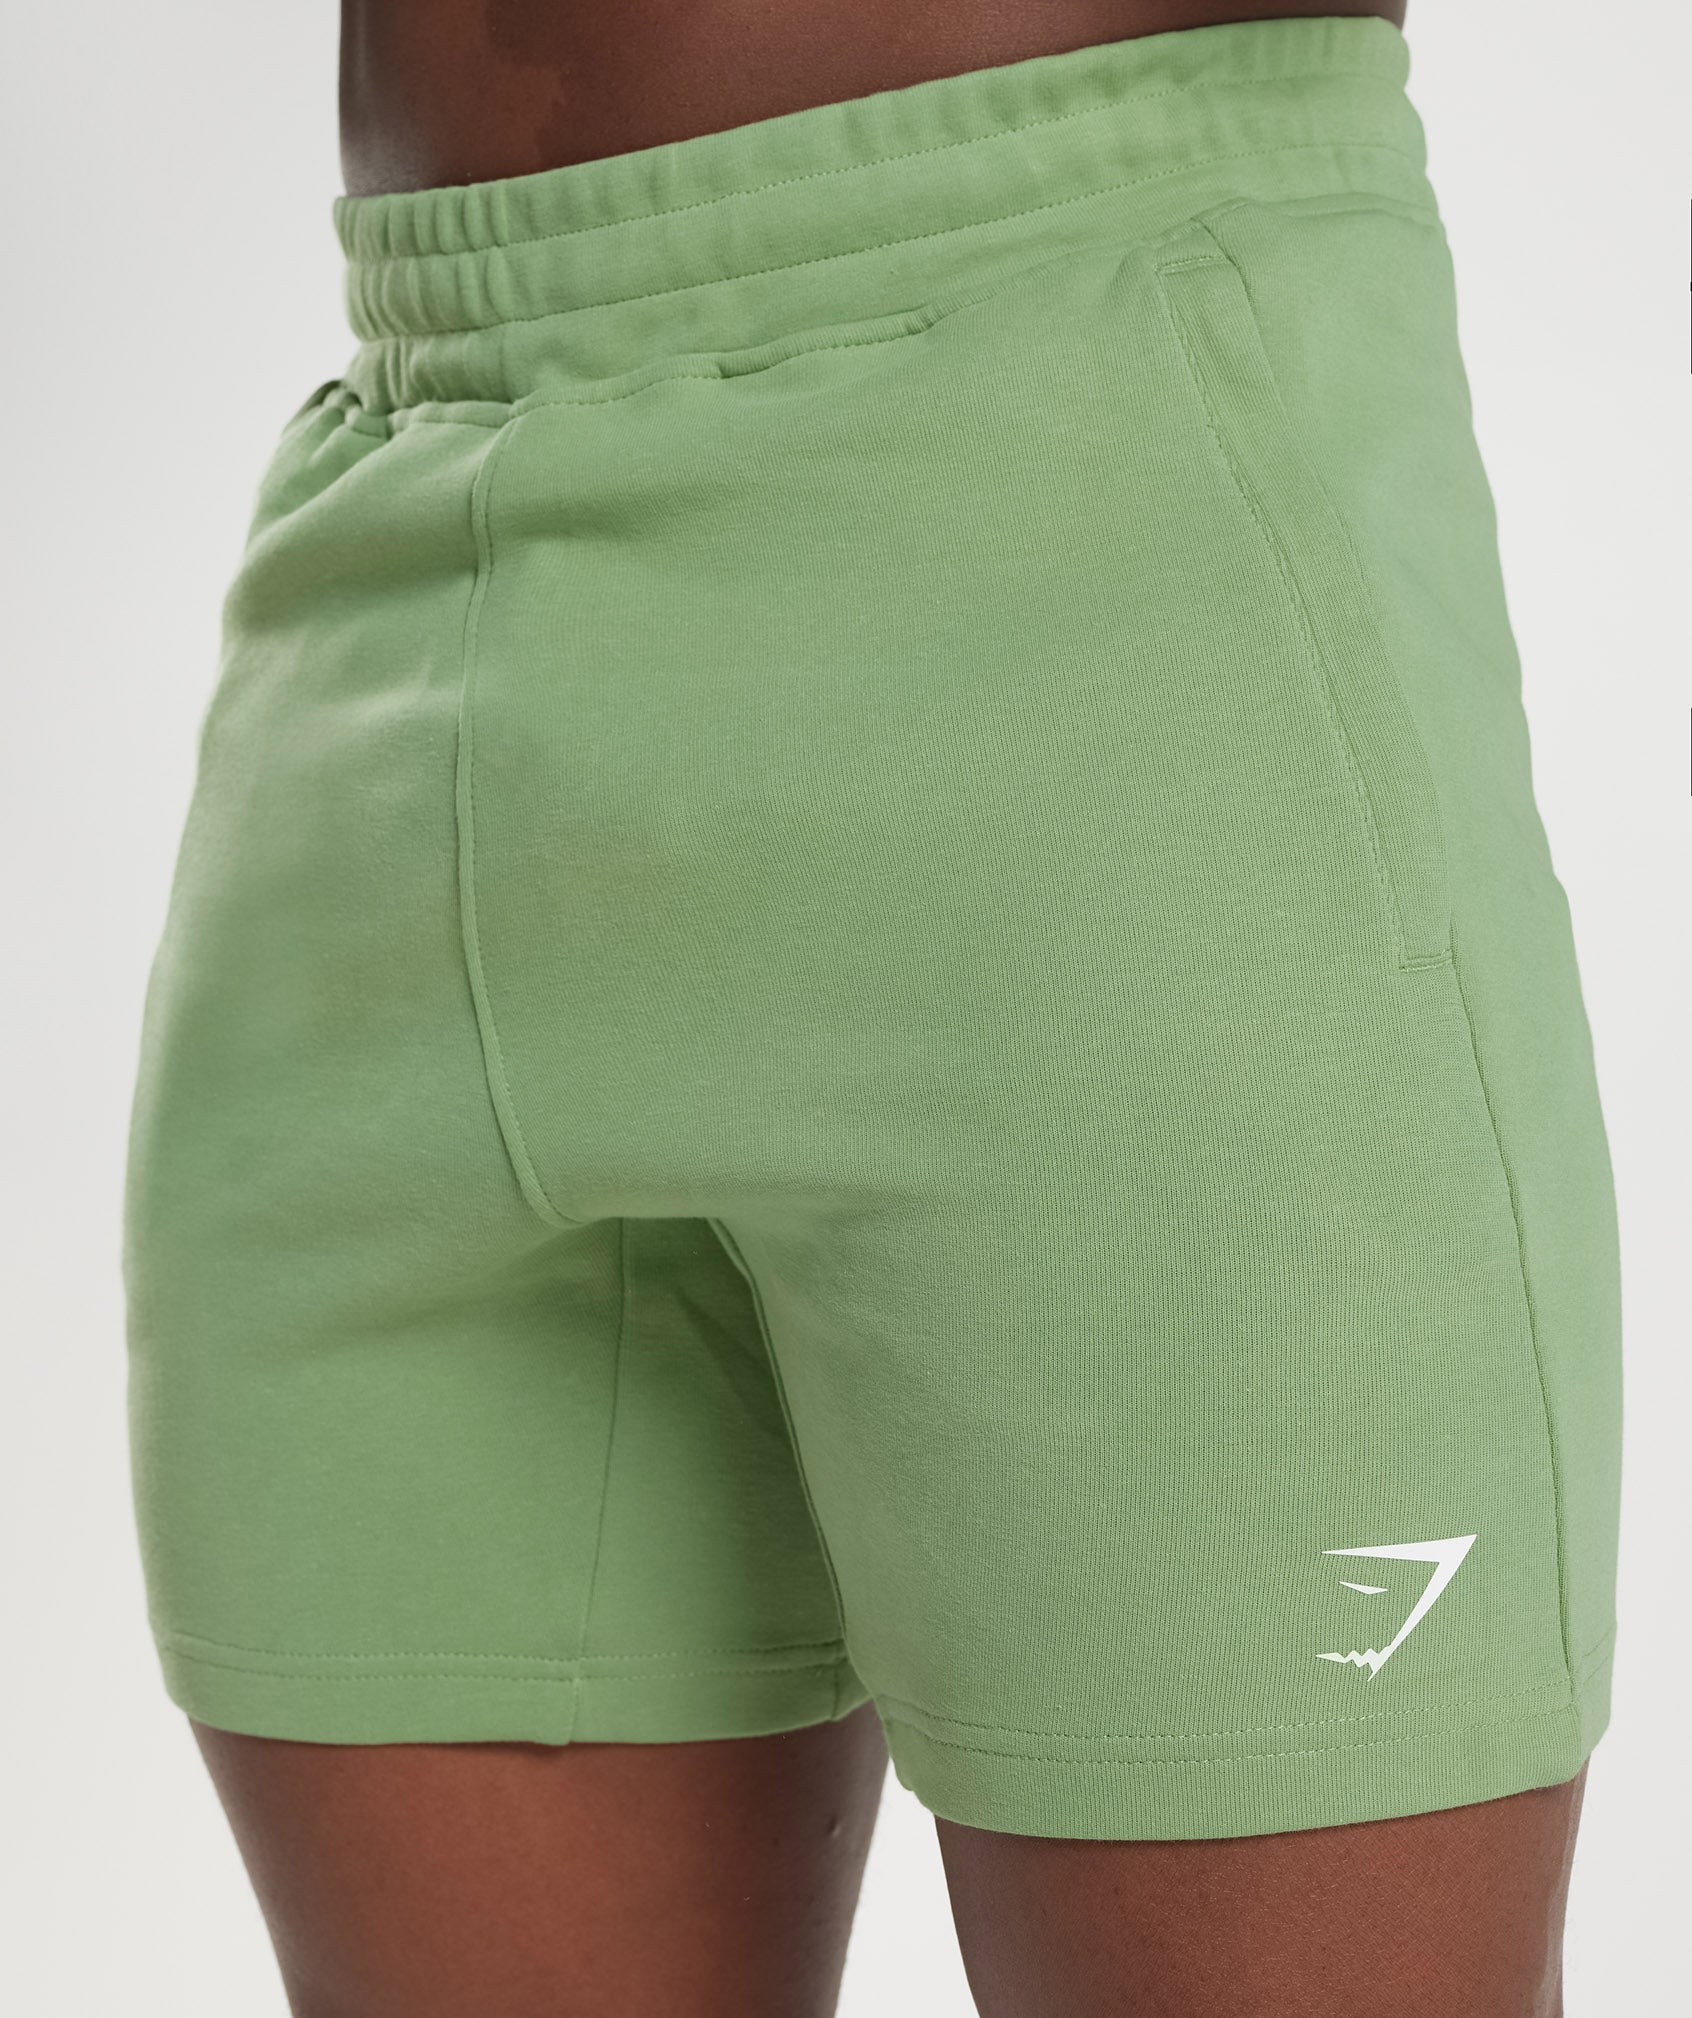 React 7" Shorts in Tea Green - view 5